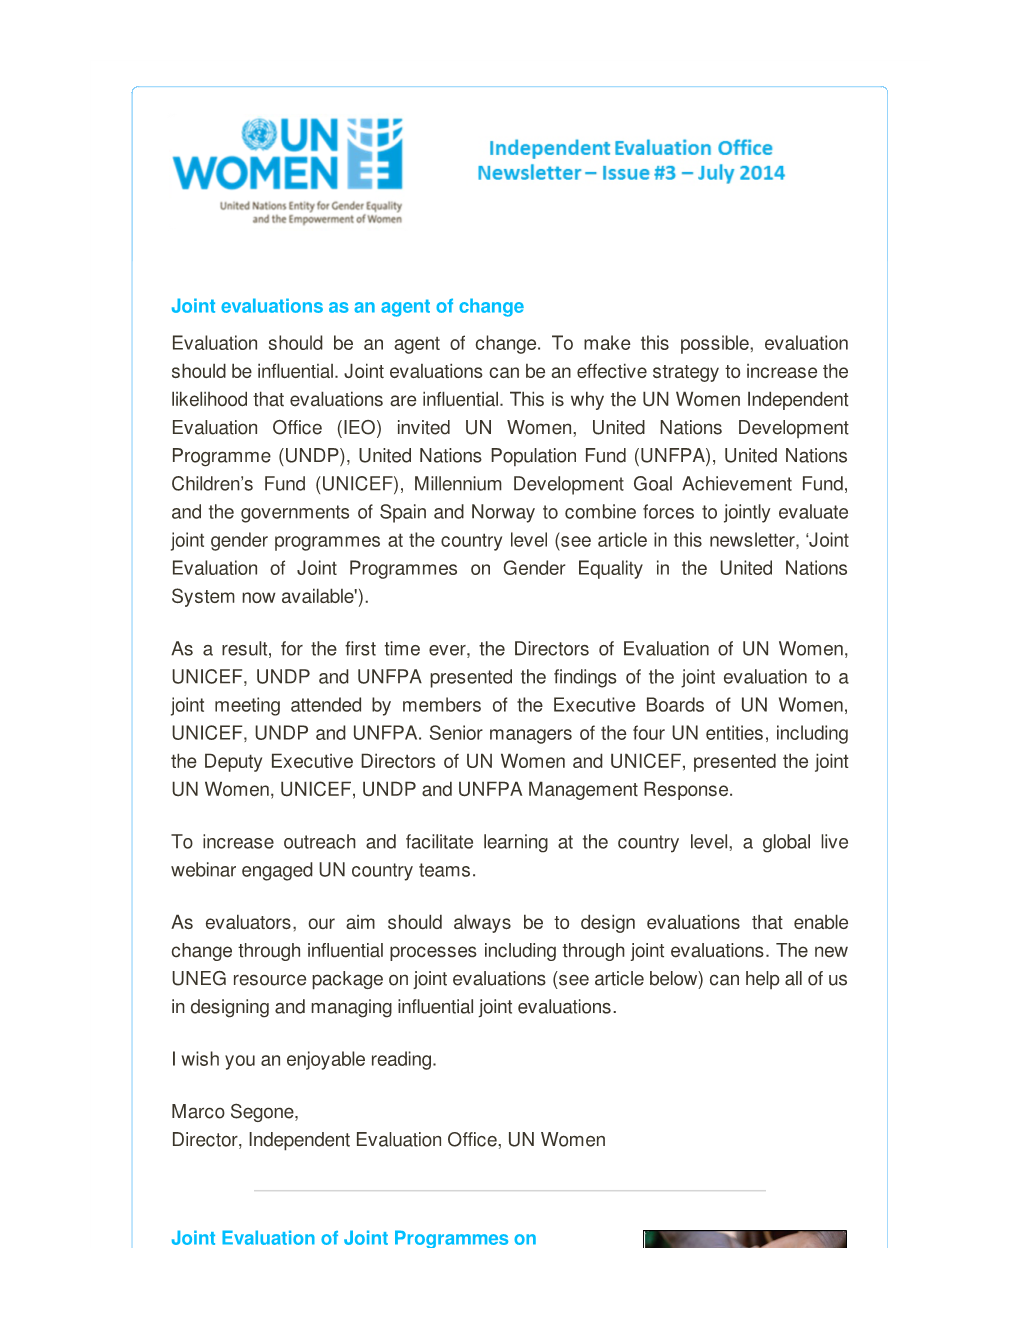 UN Women Independent Evaluation Office Newsletter #3